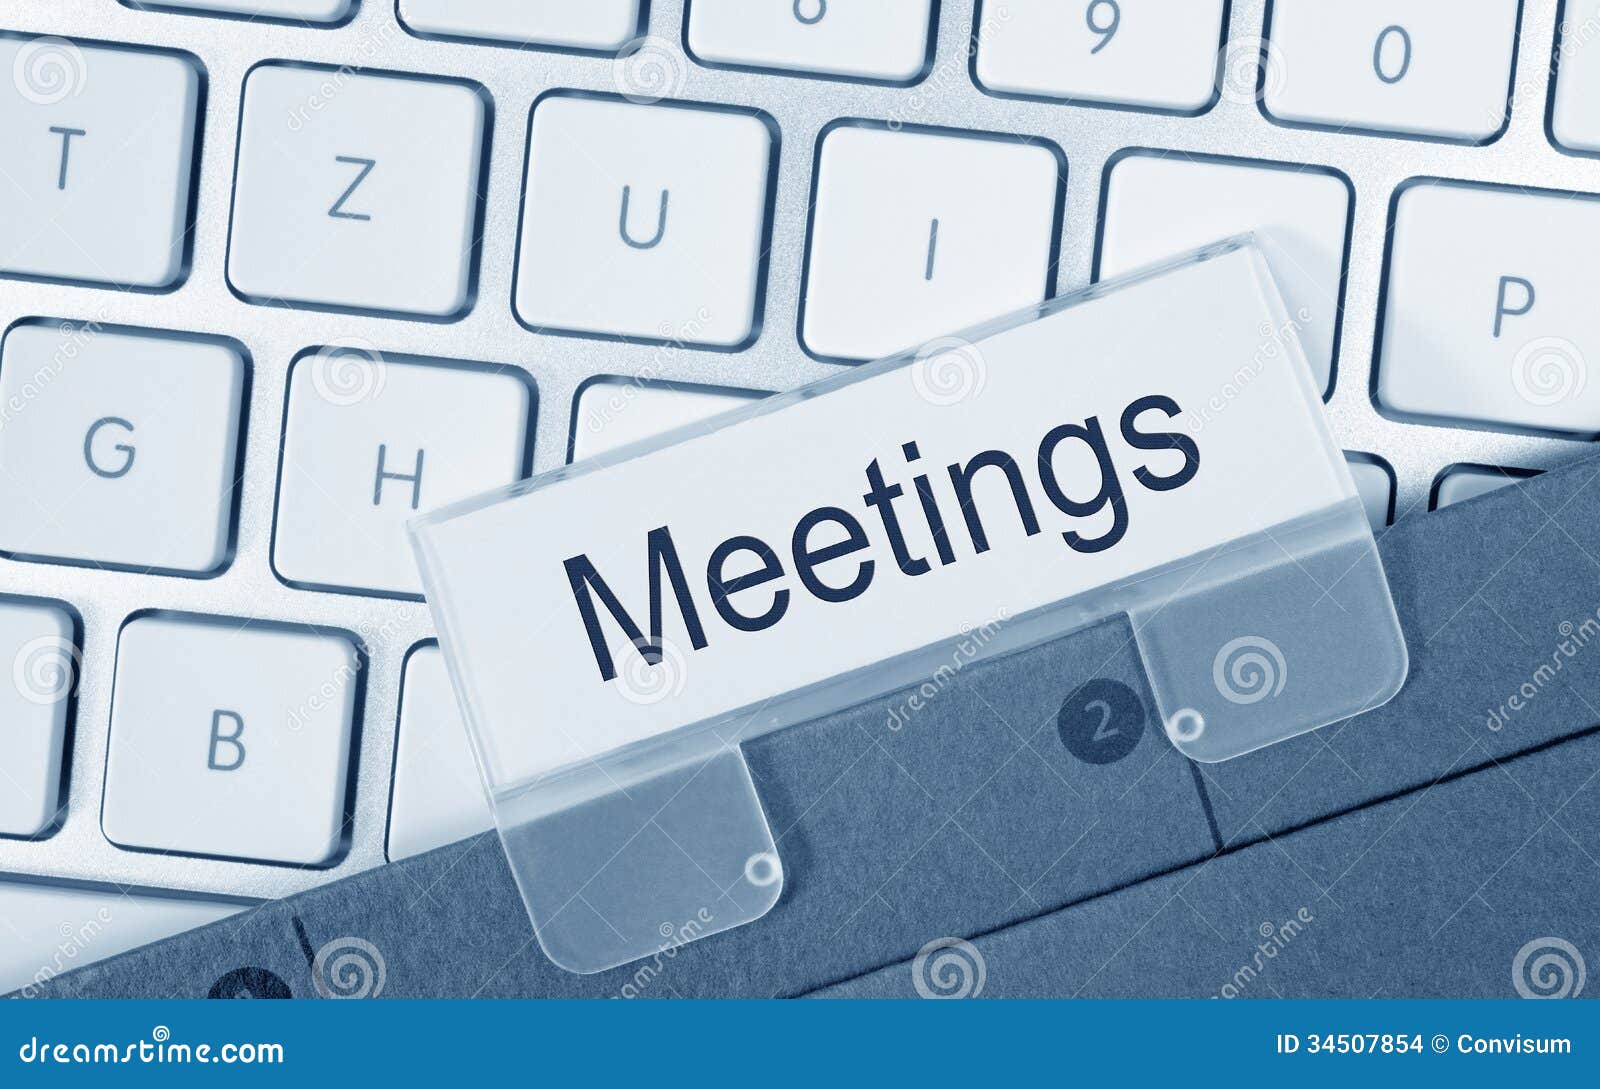 meetings folder on computer